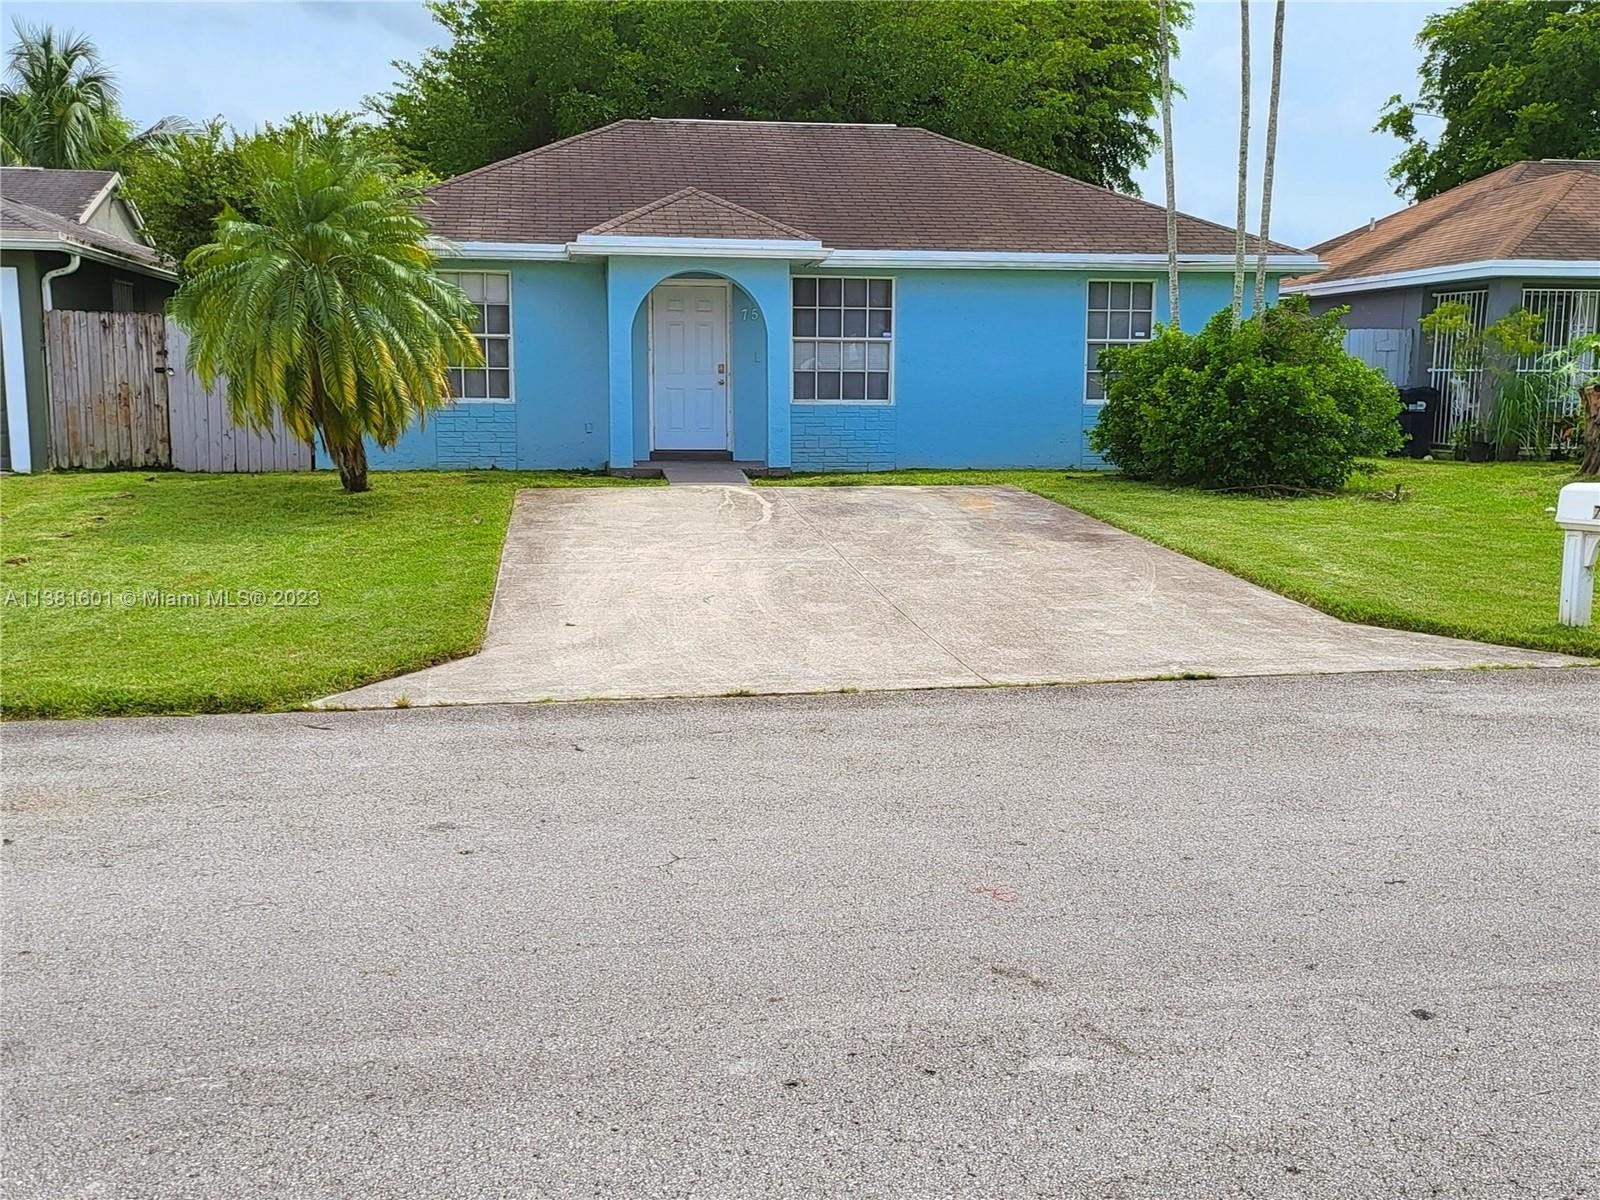 Florida City Homes For Sale